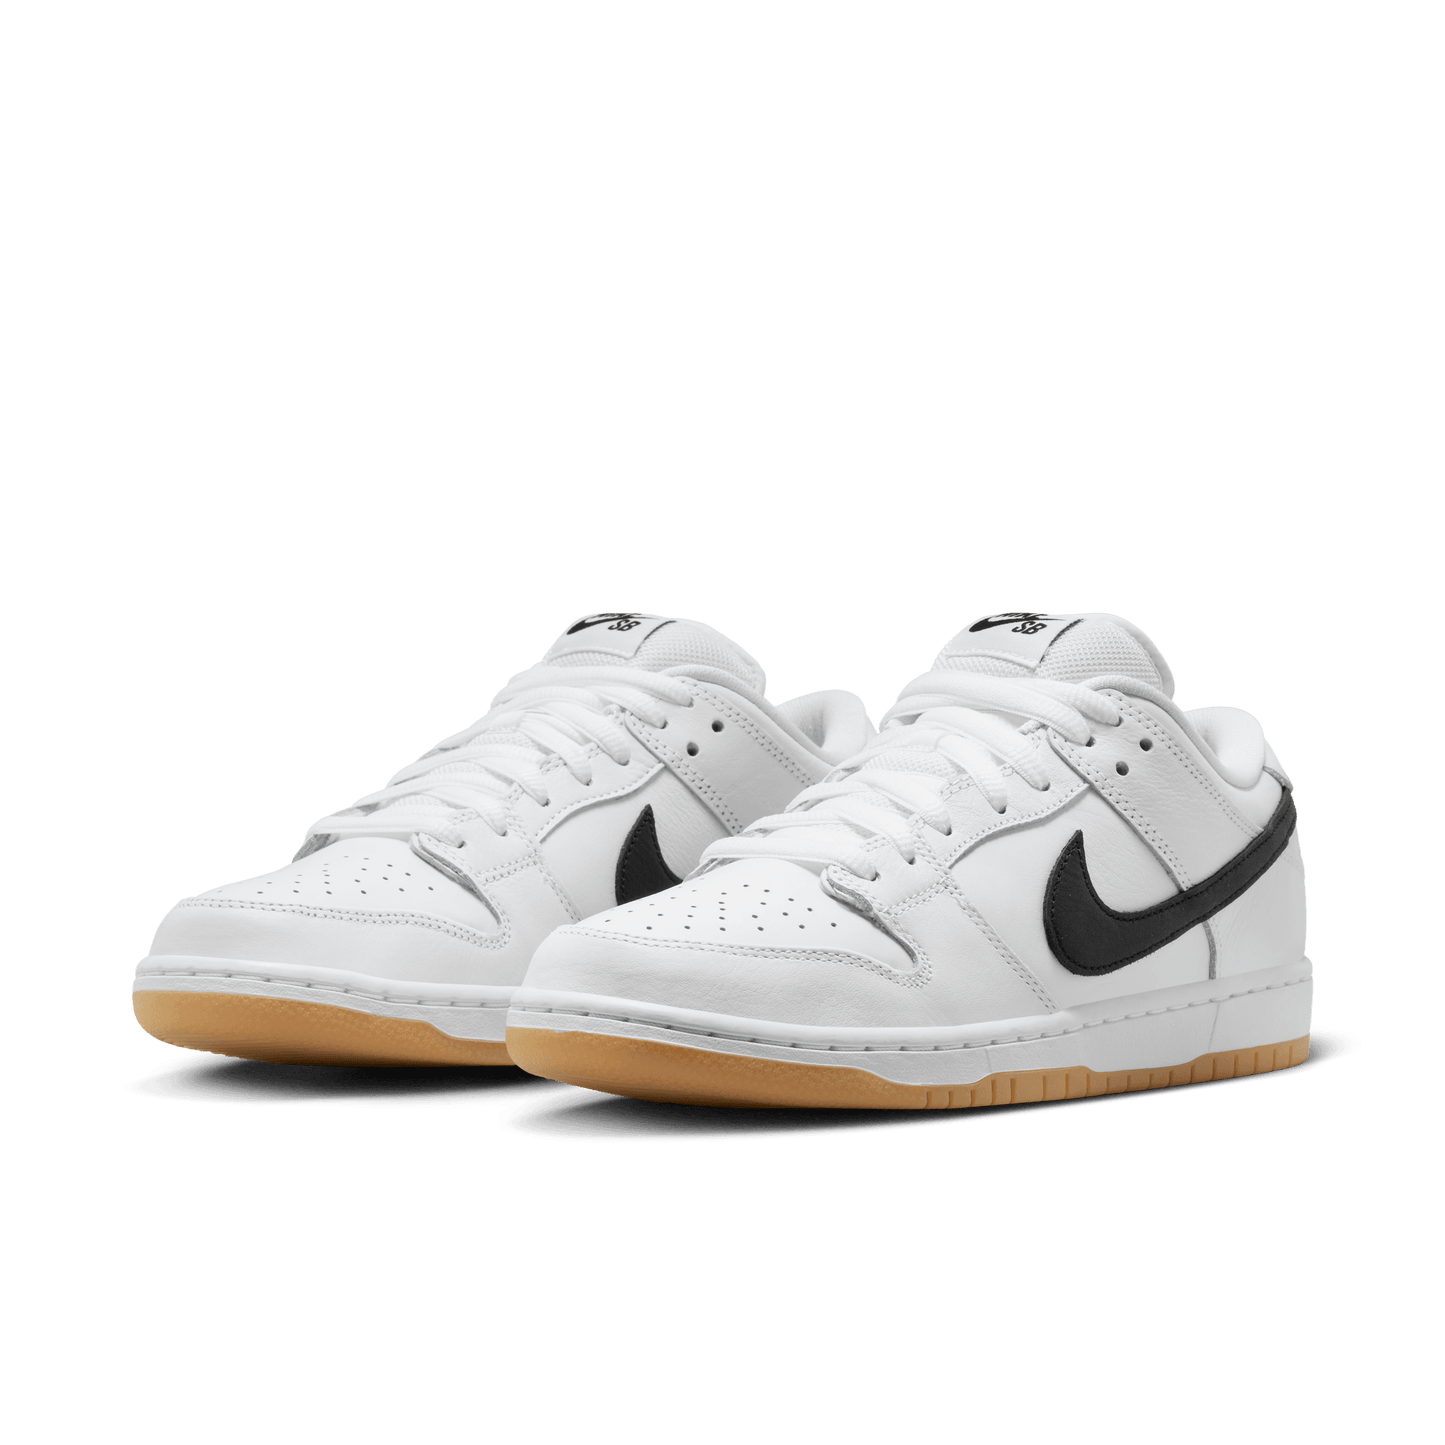 Nike SB Dunk Low Pro ISO white black white gum light brown